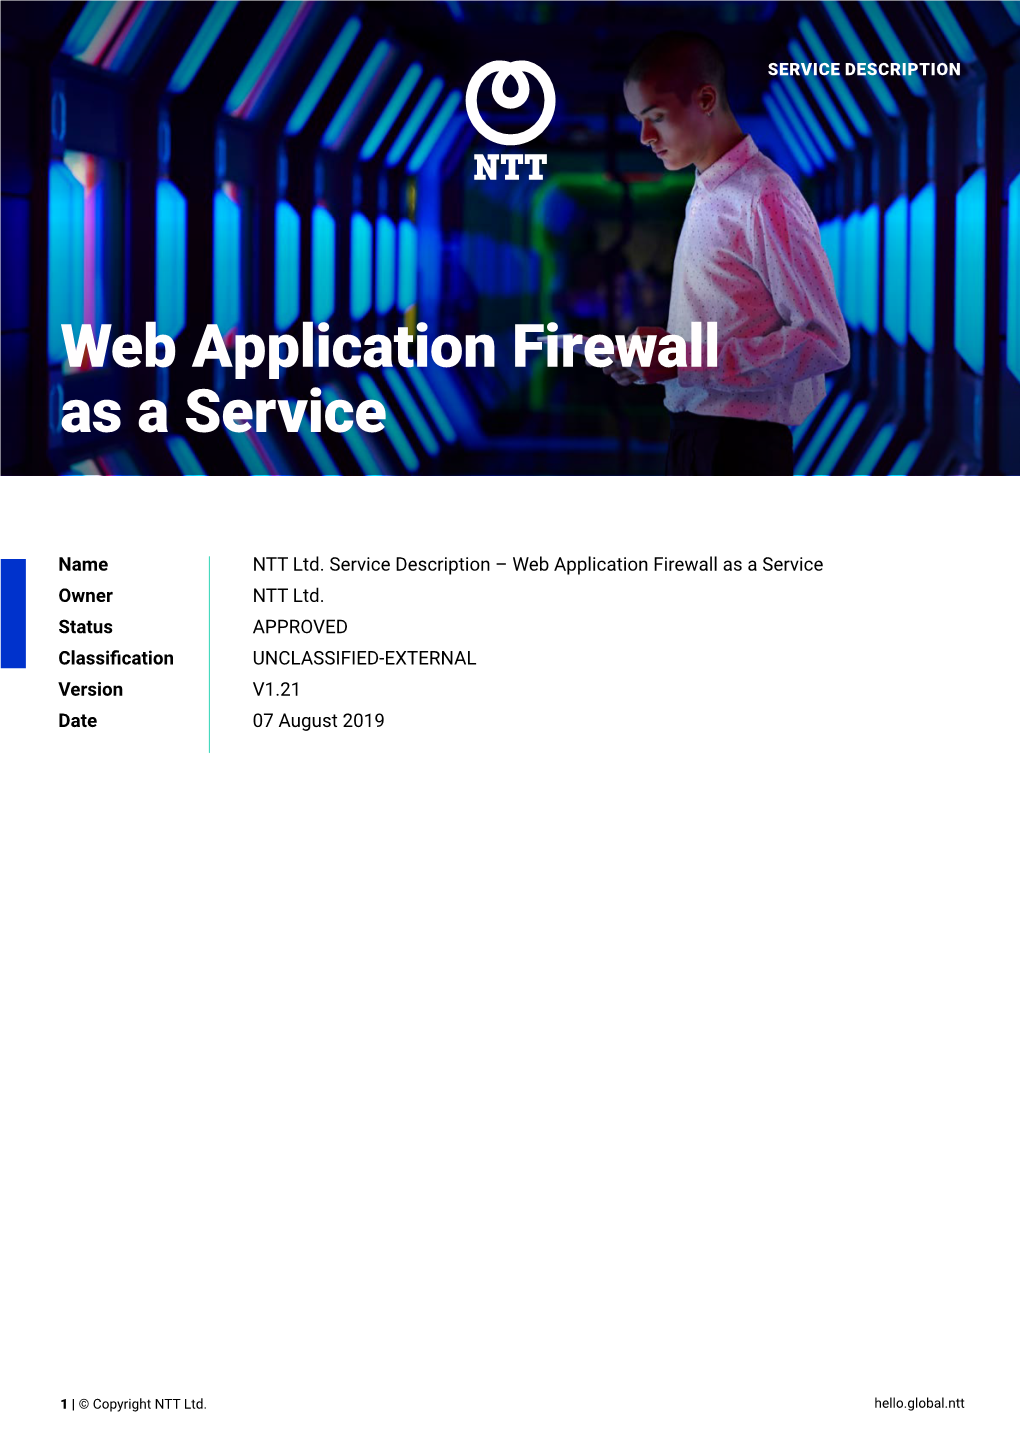 Web Application Firewall As a Service